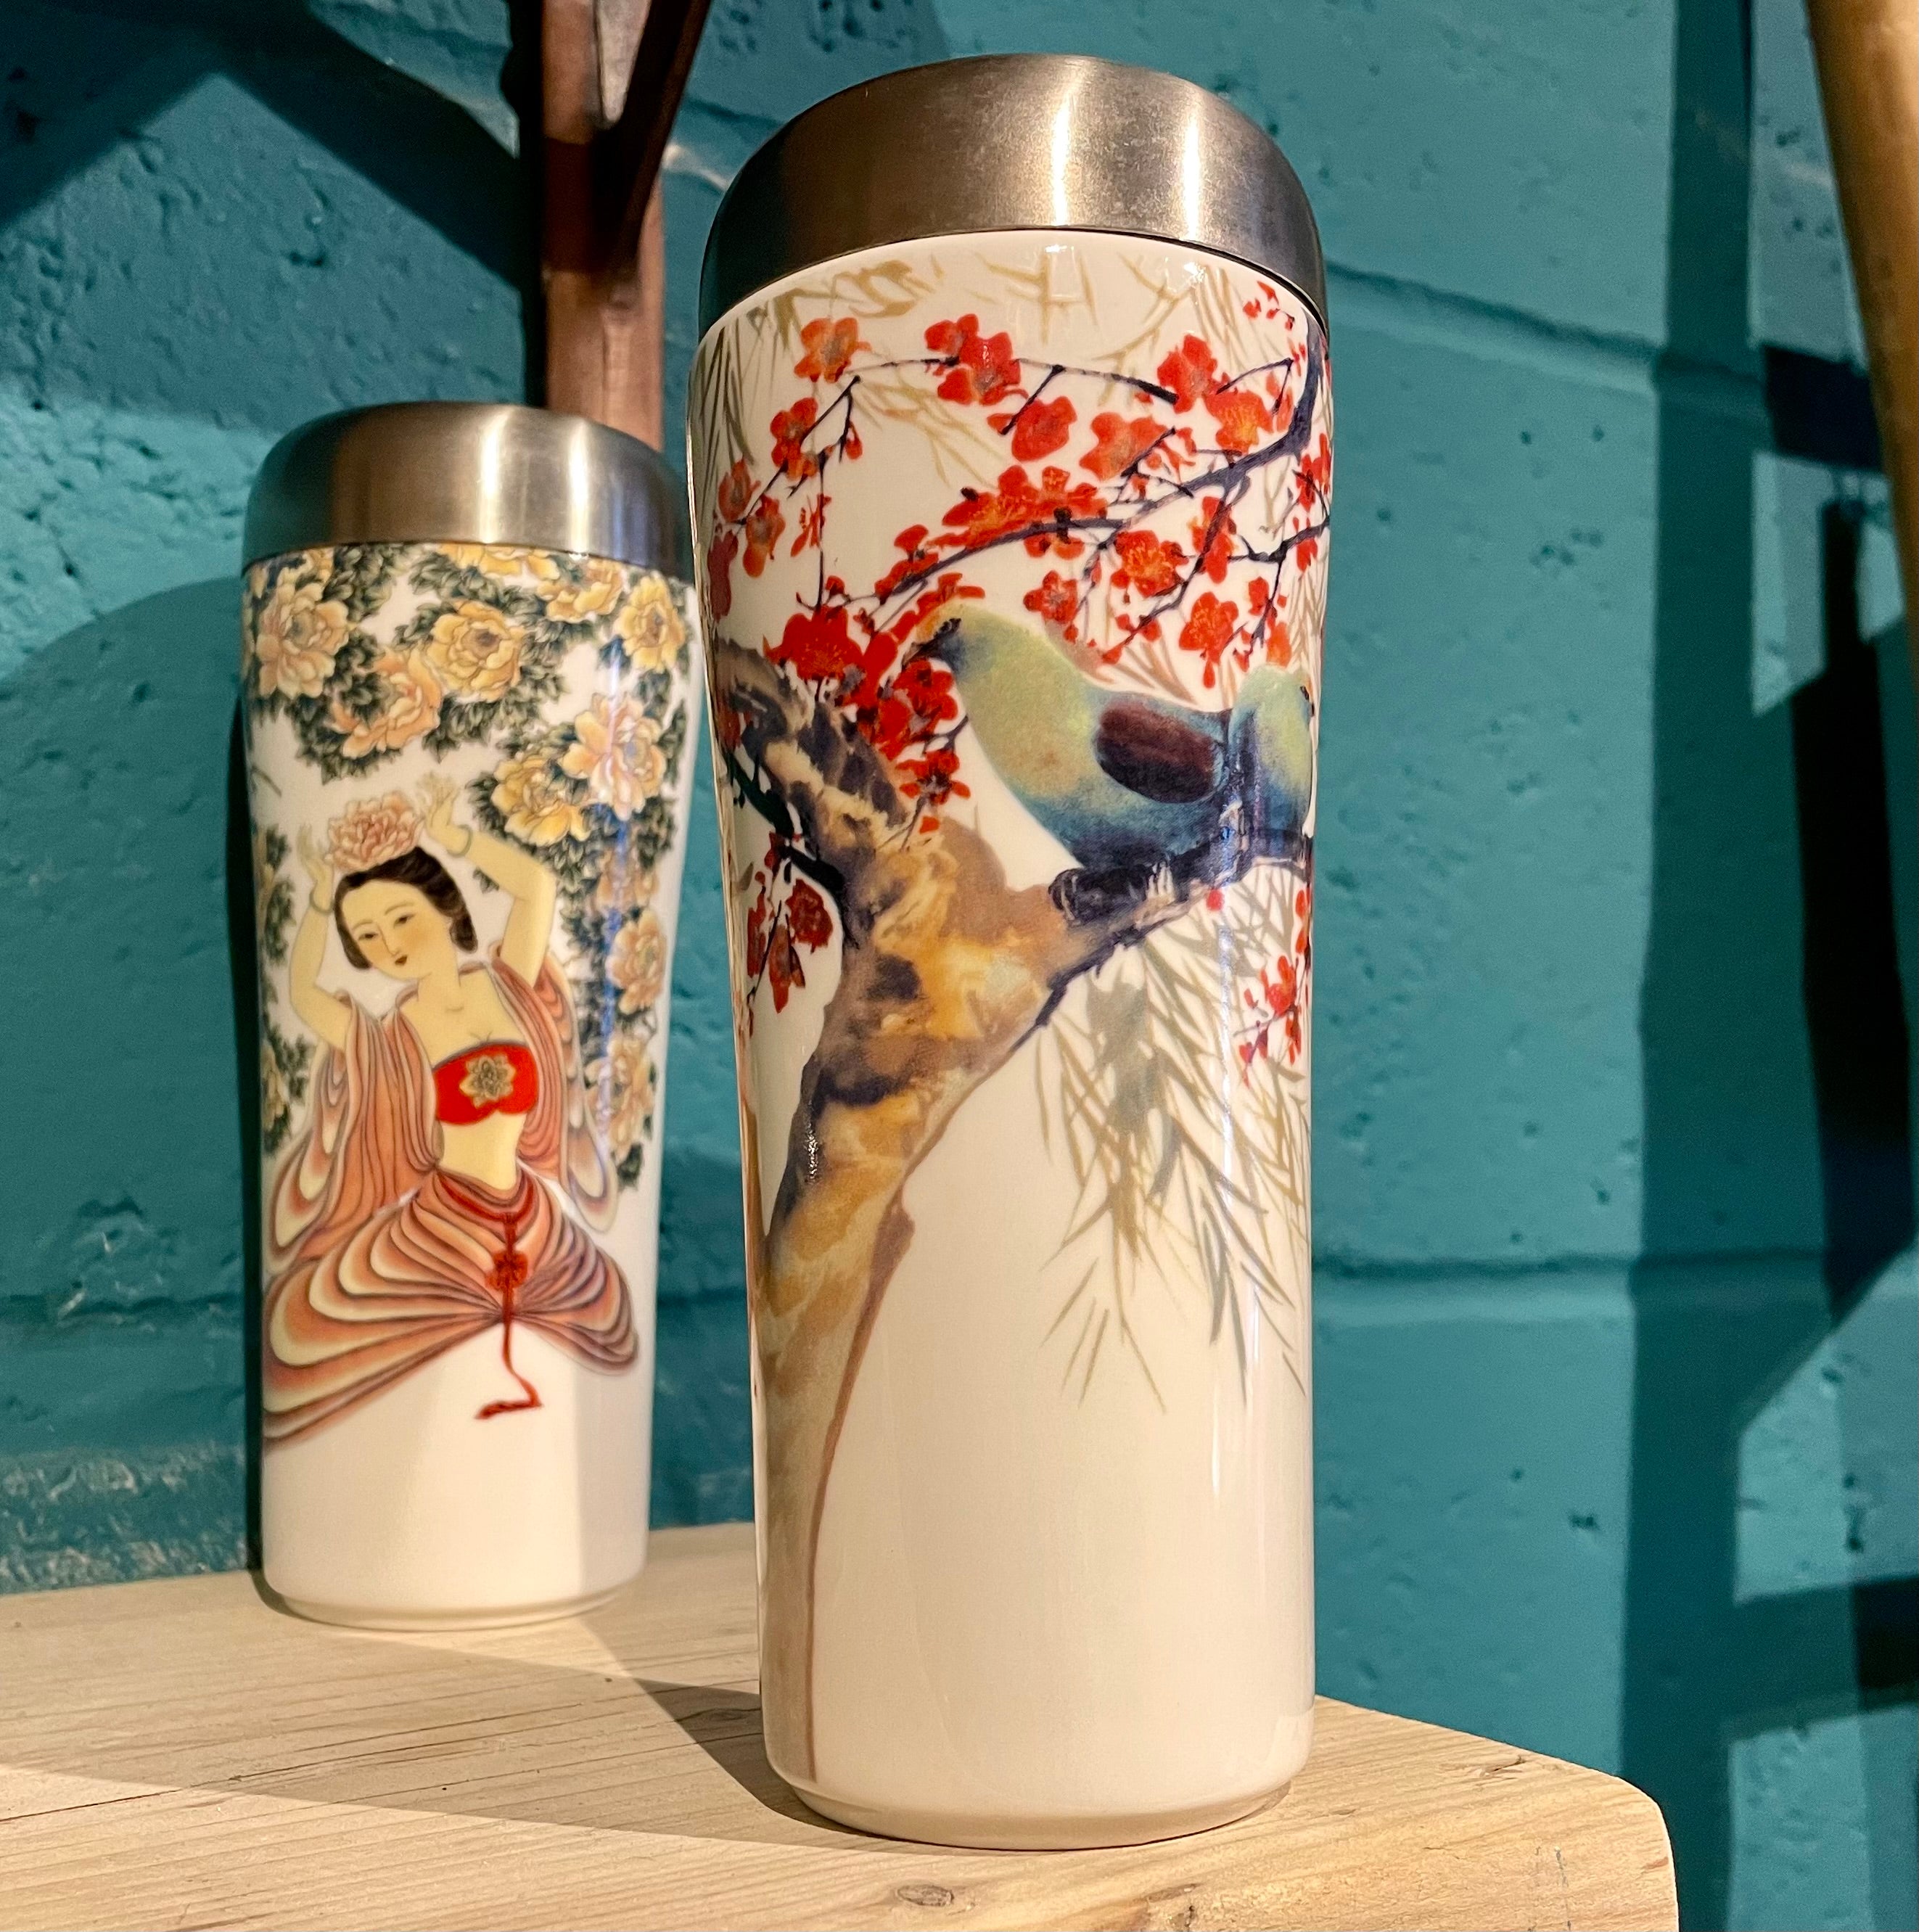 Flower Lady Porcelain Tumbler Mug – 300ml | MDTEA